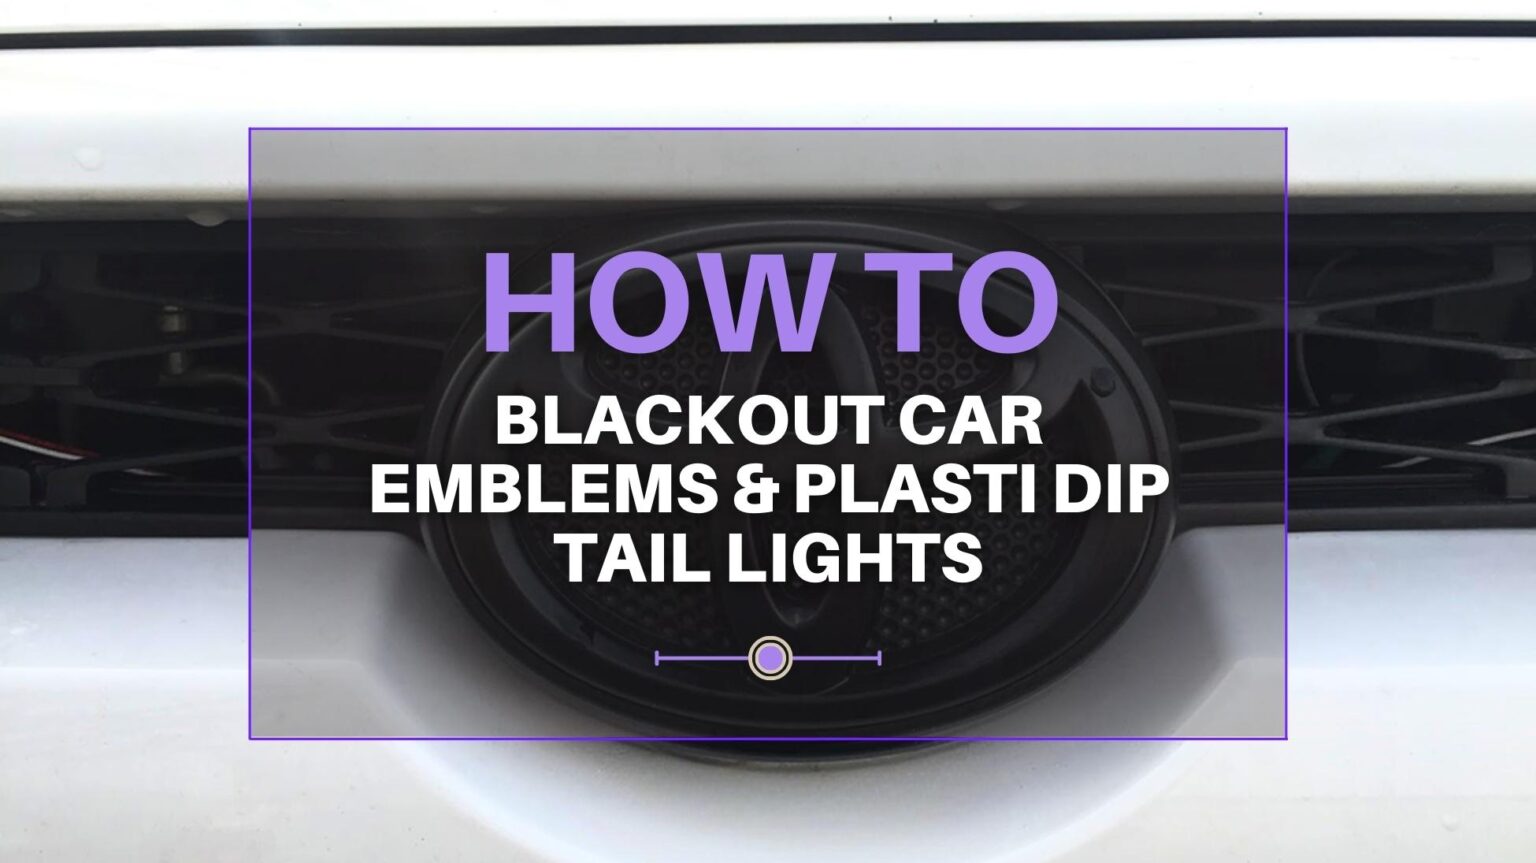 How To Blackout Car Emblems Plasti Dip Tail Lights 1536x863 